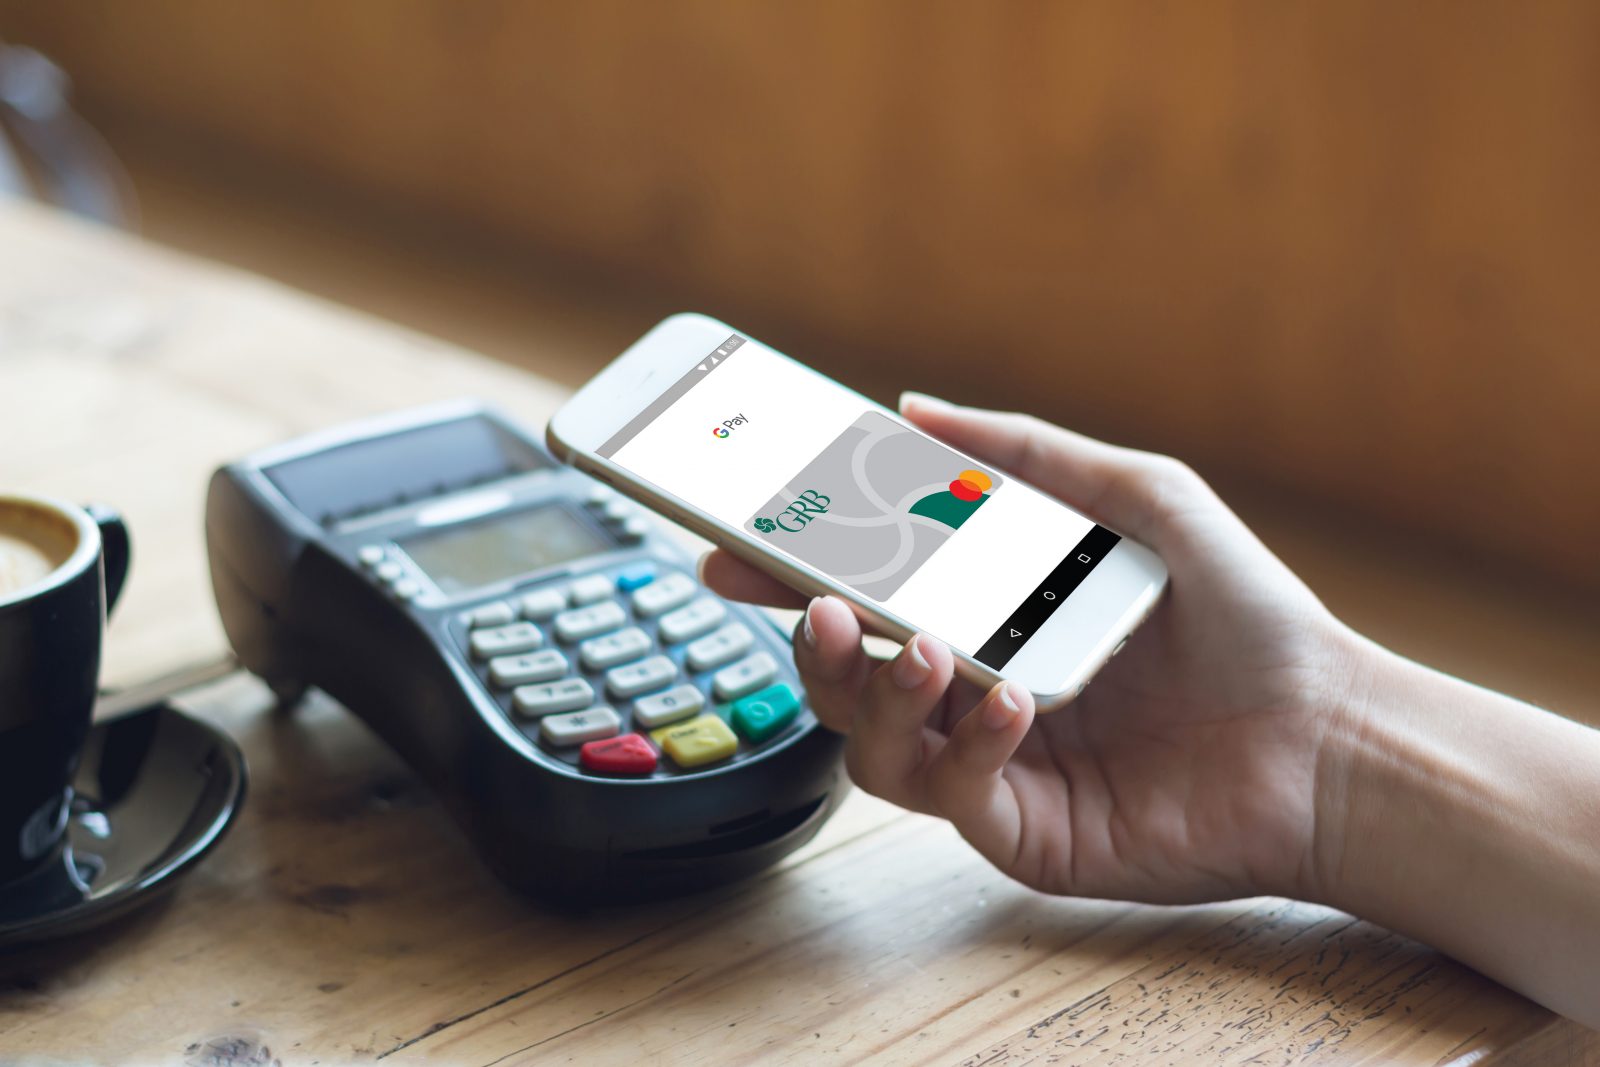 Mobile phone with Digital Wallet debit card on screen